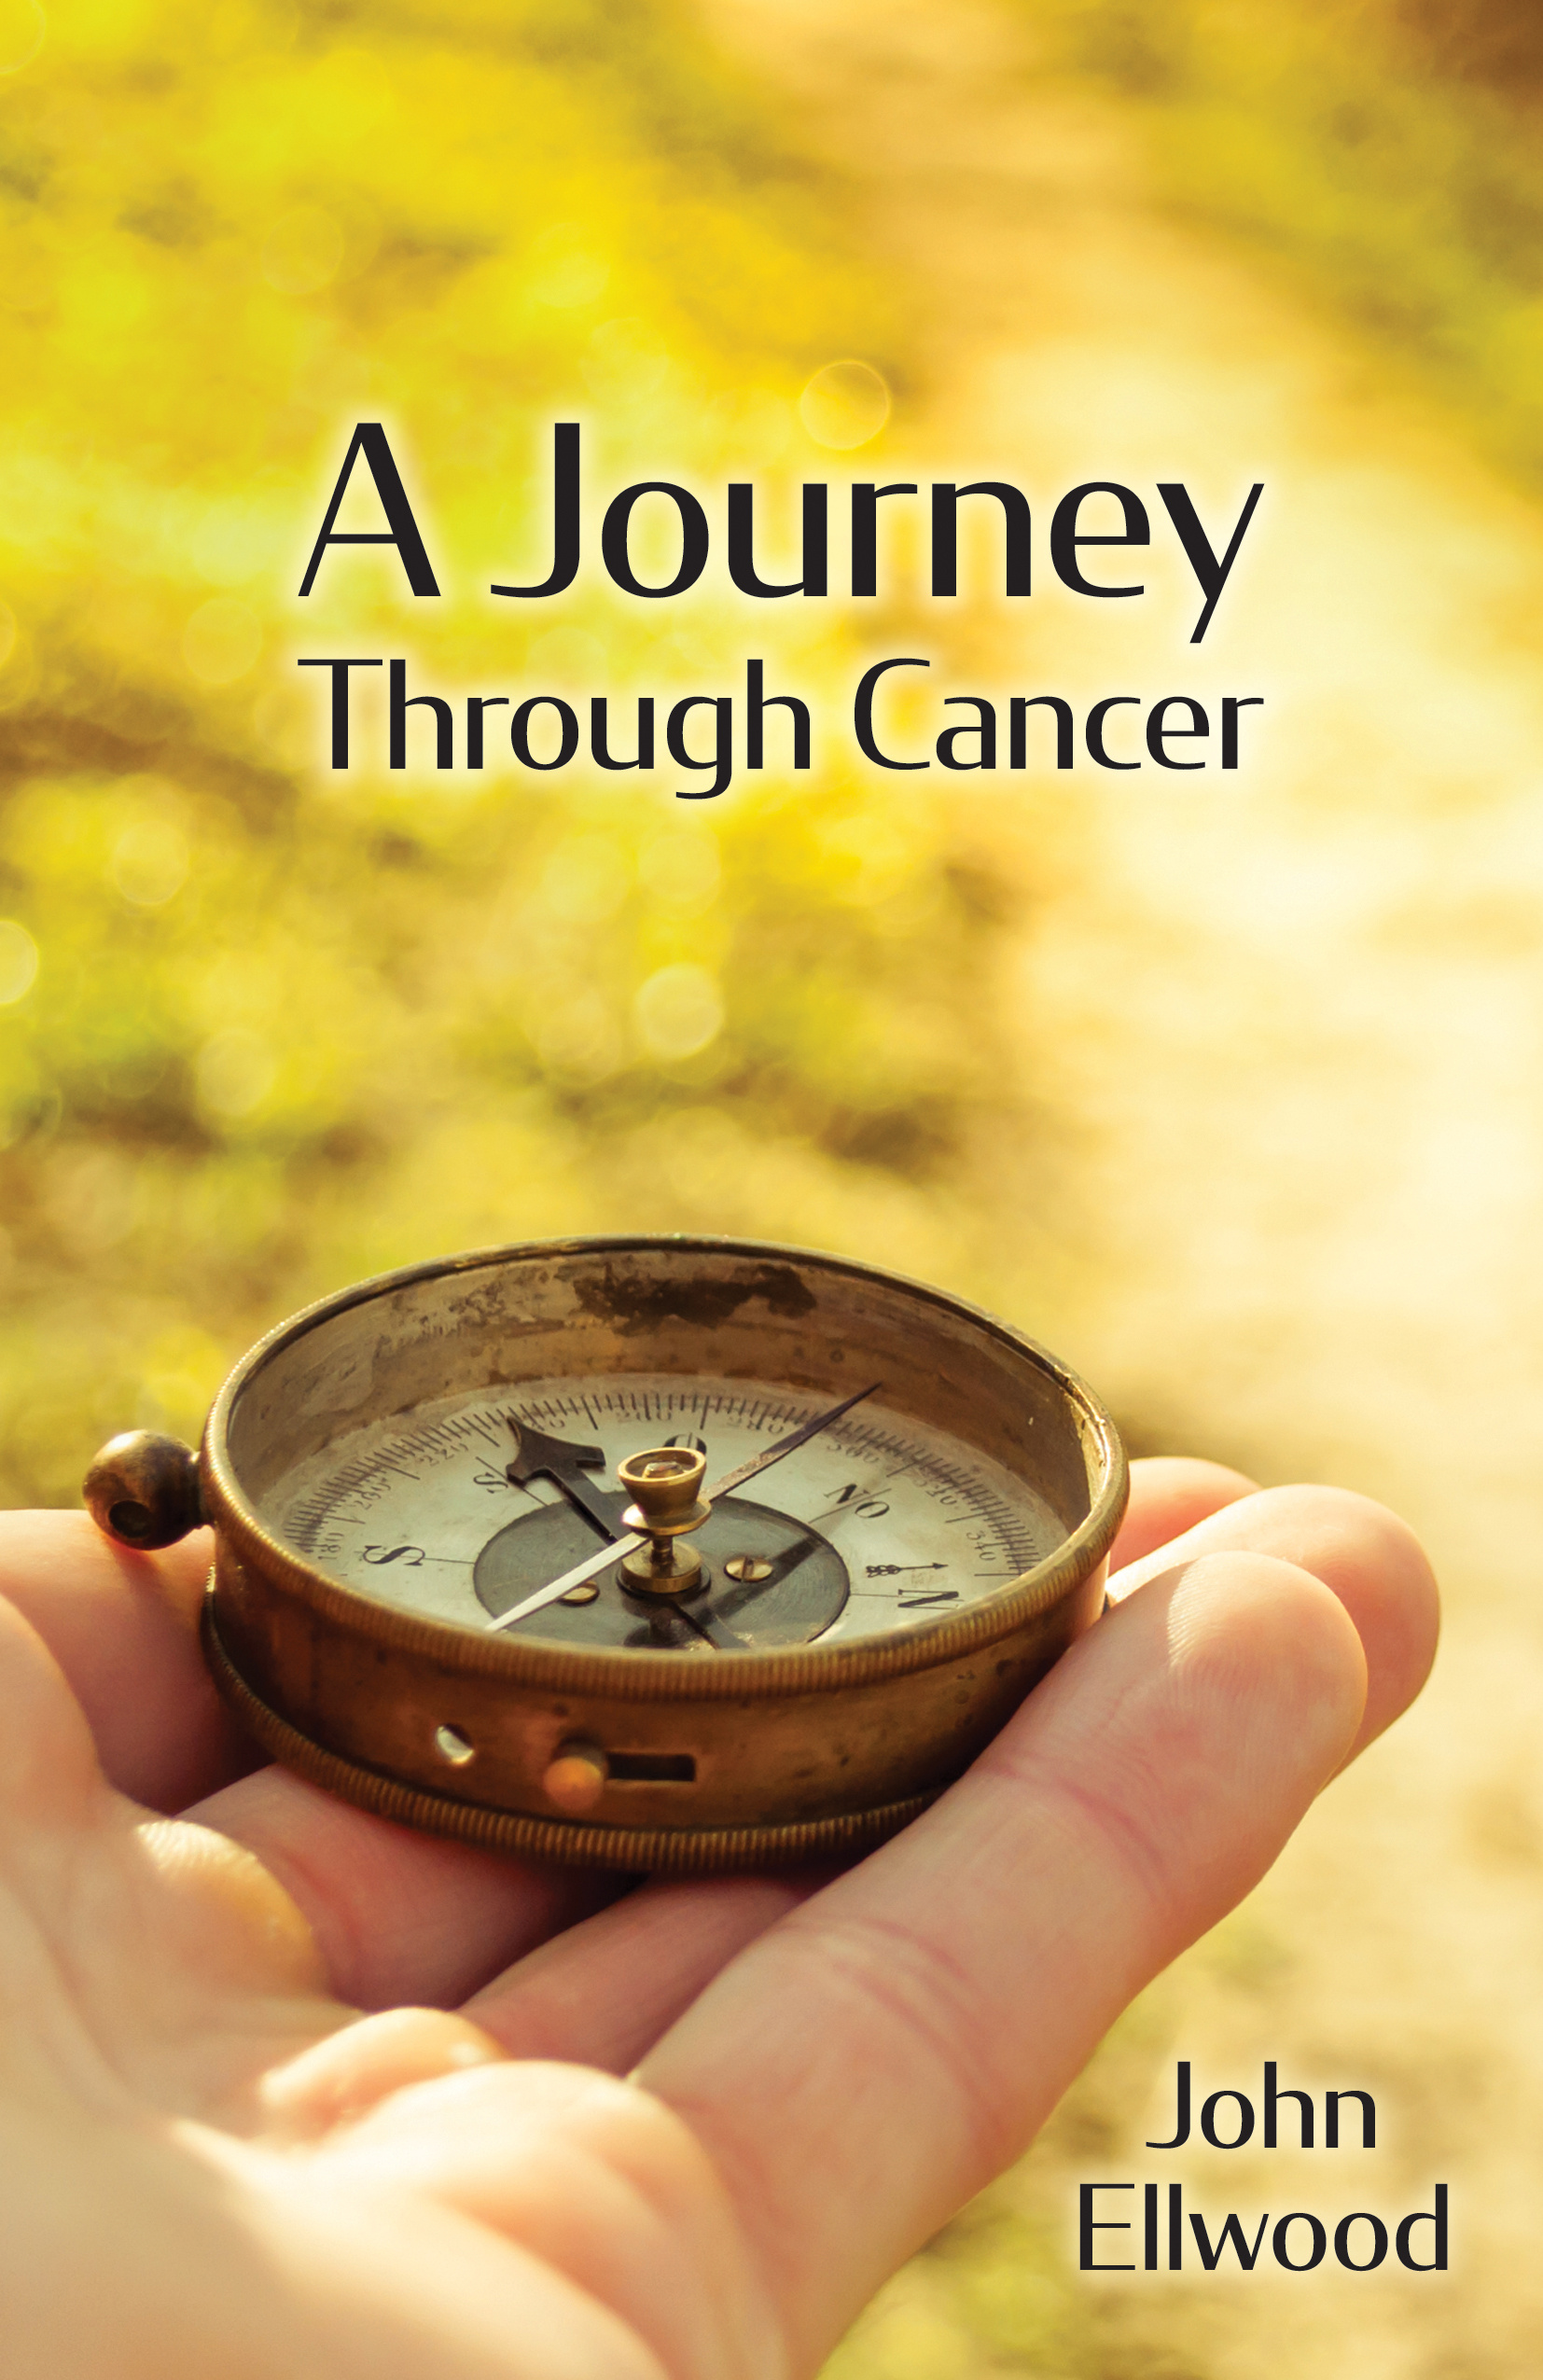 cancer journey